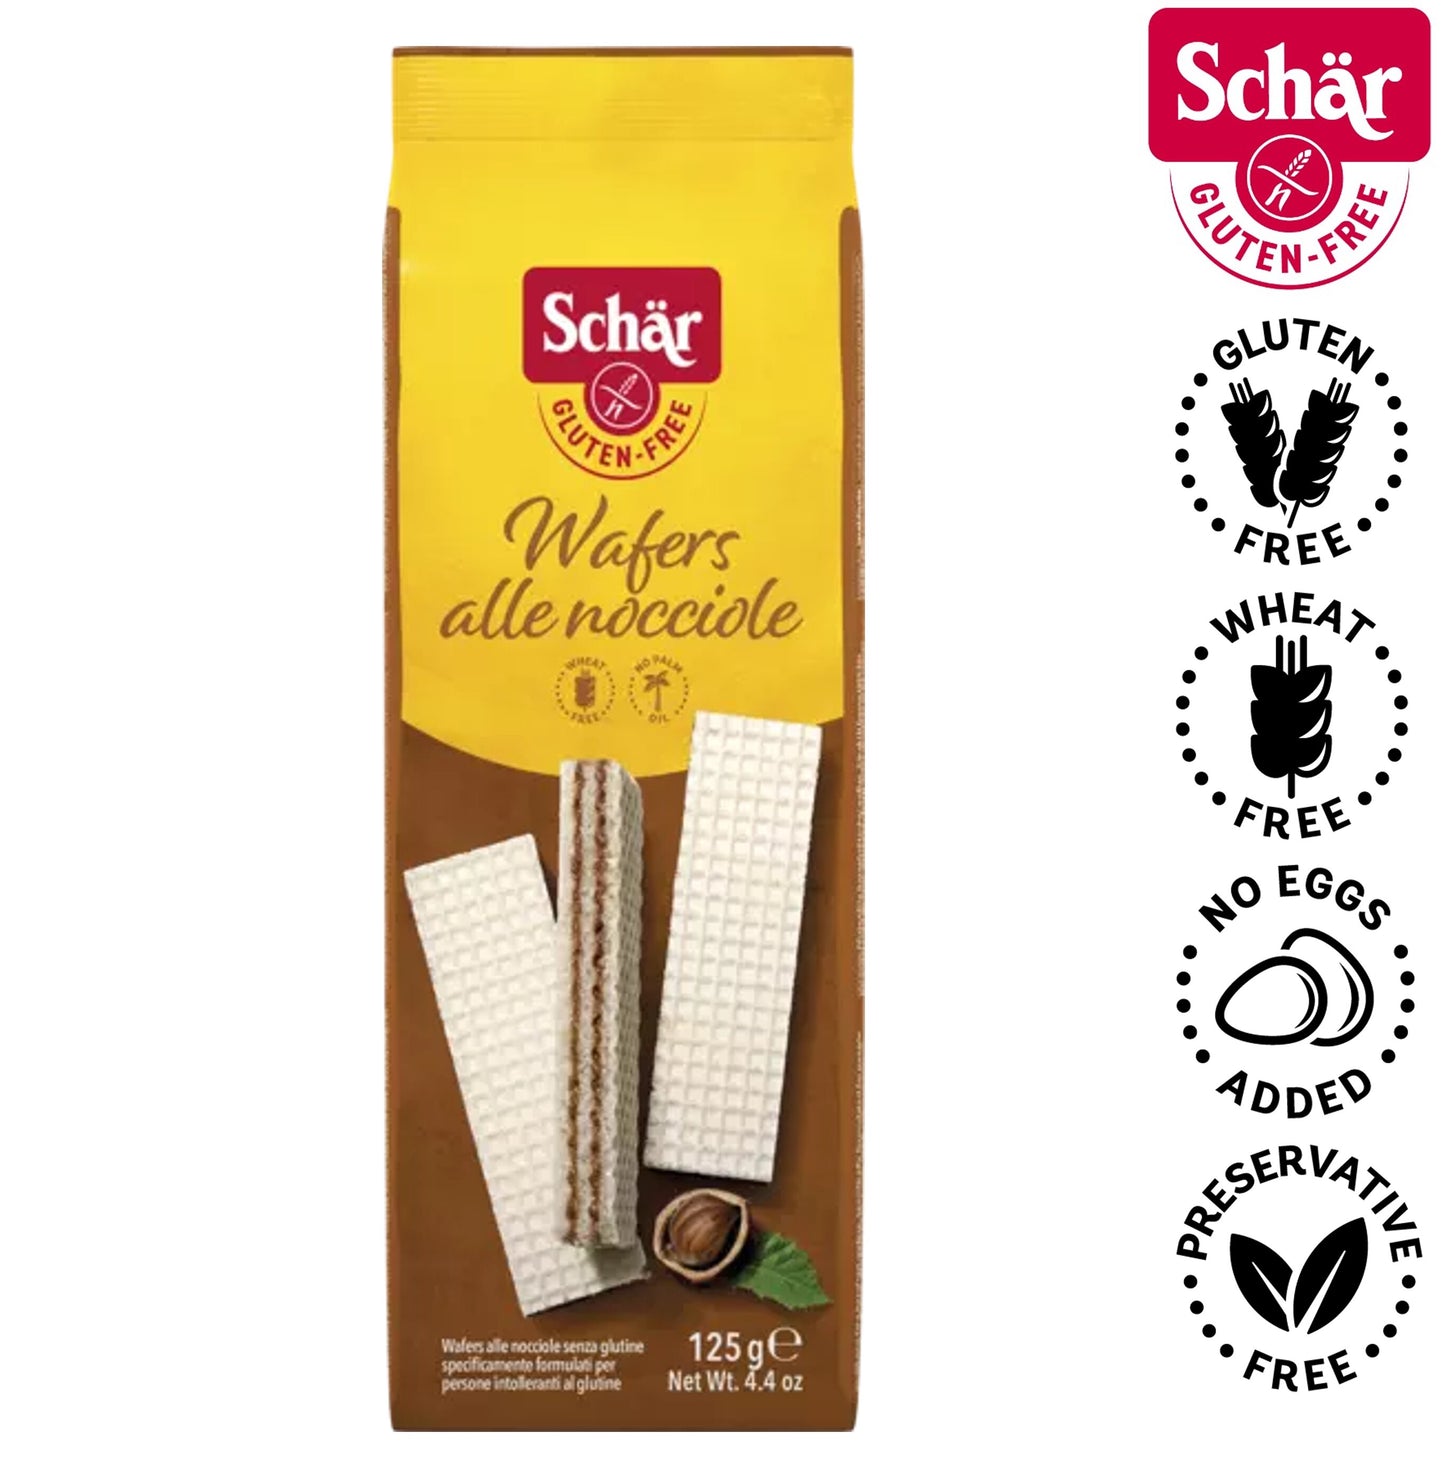 Schar Wafers with Hazelnut Cream - Gluten Free